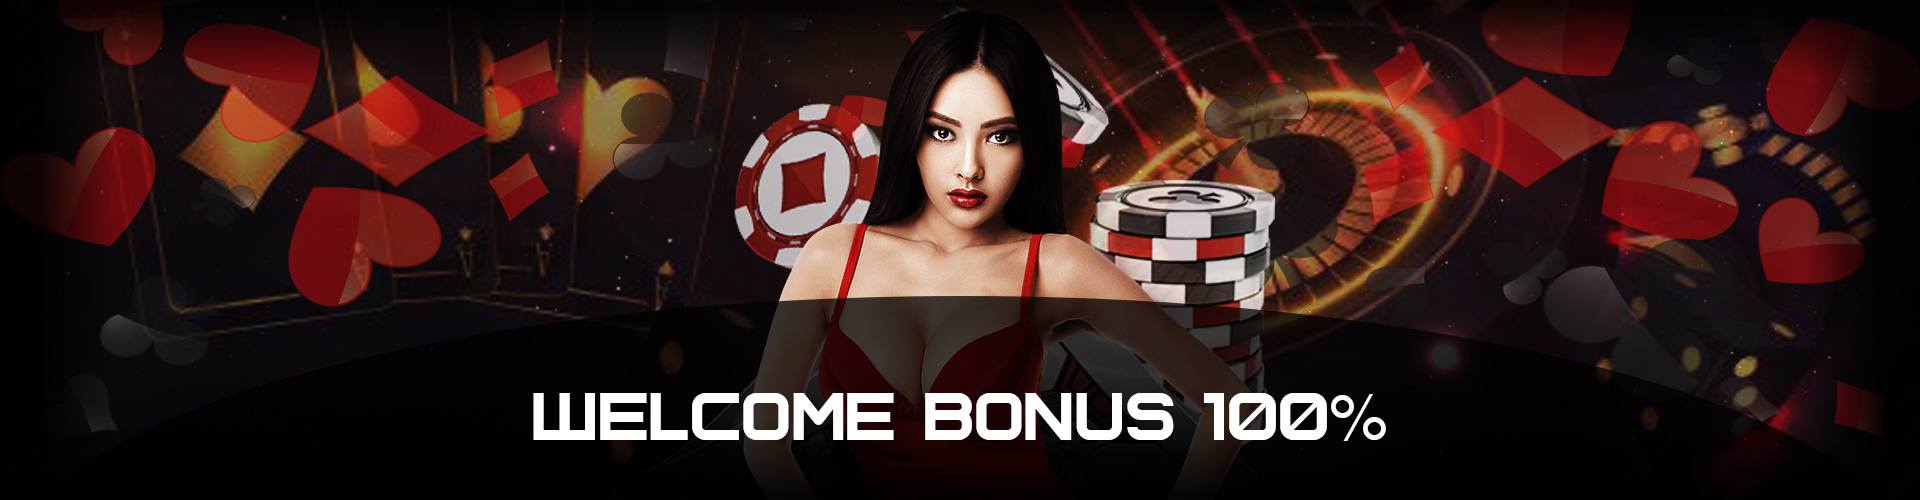 Online Casino Malaysia 100% Welcome Bonus